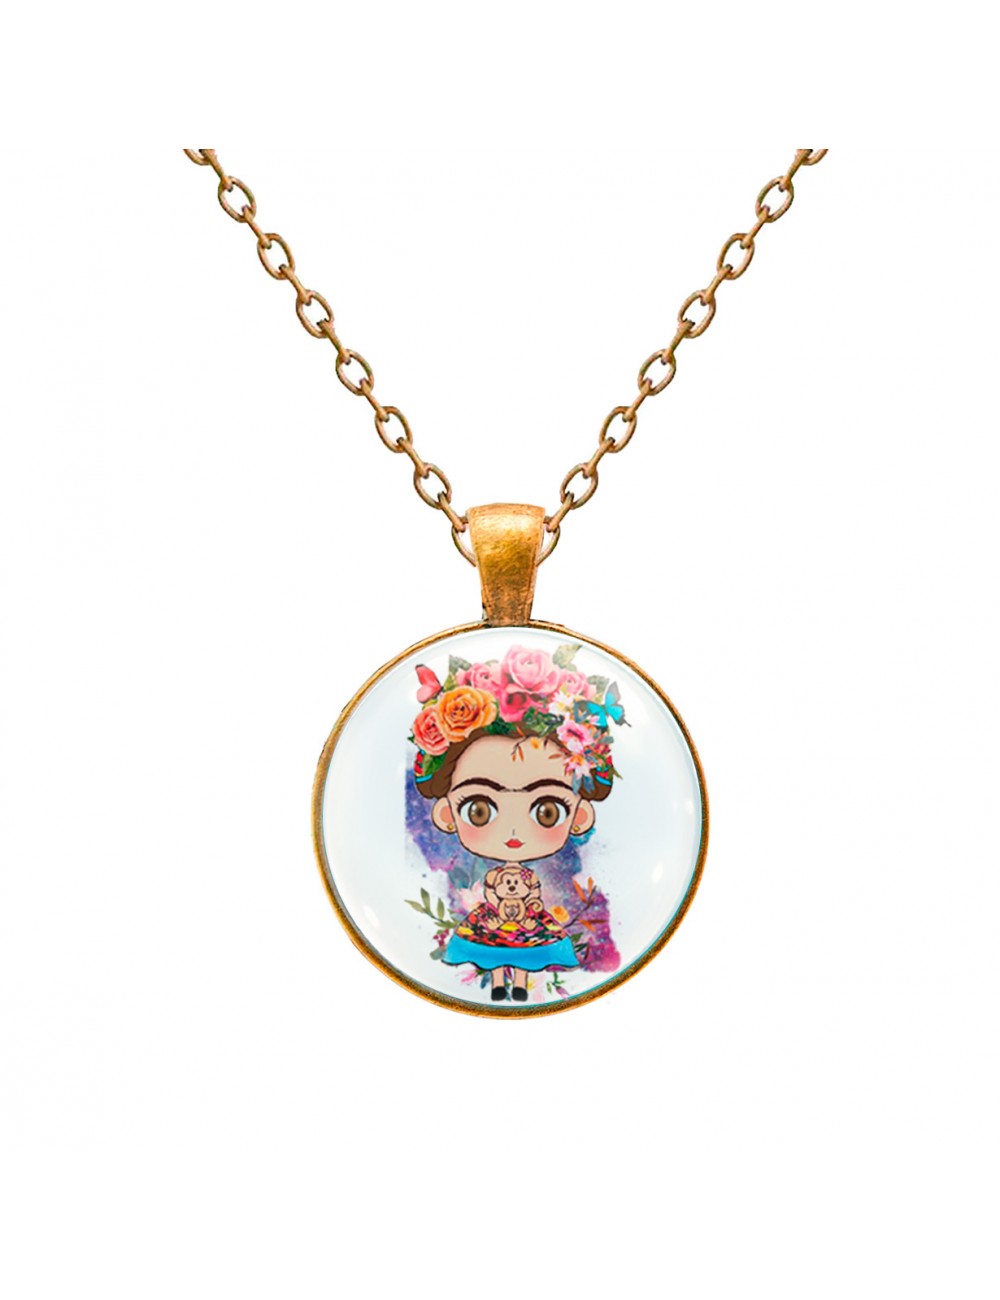 Collar Frida Kahlo 19,900.00